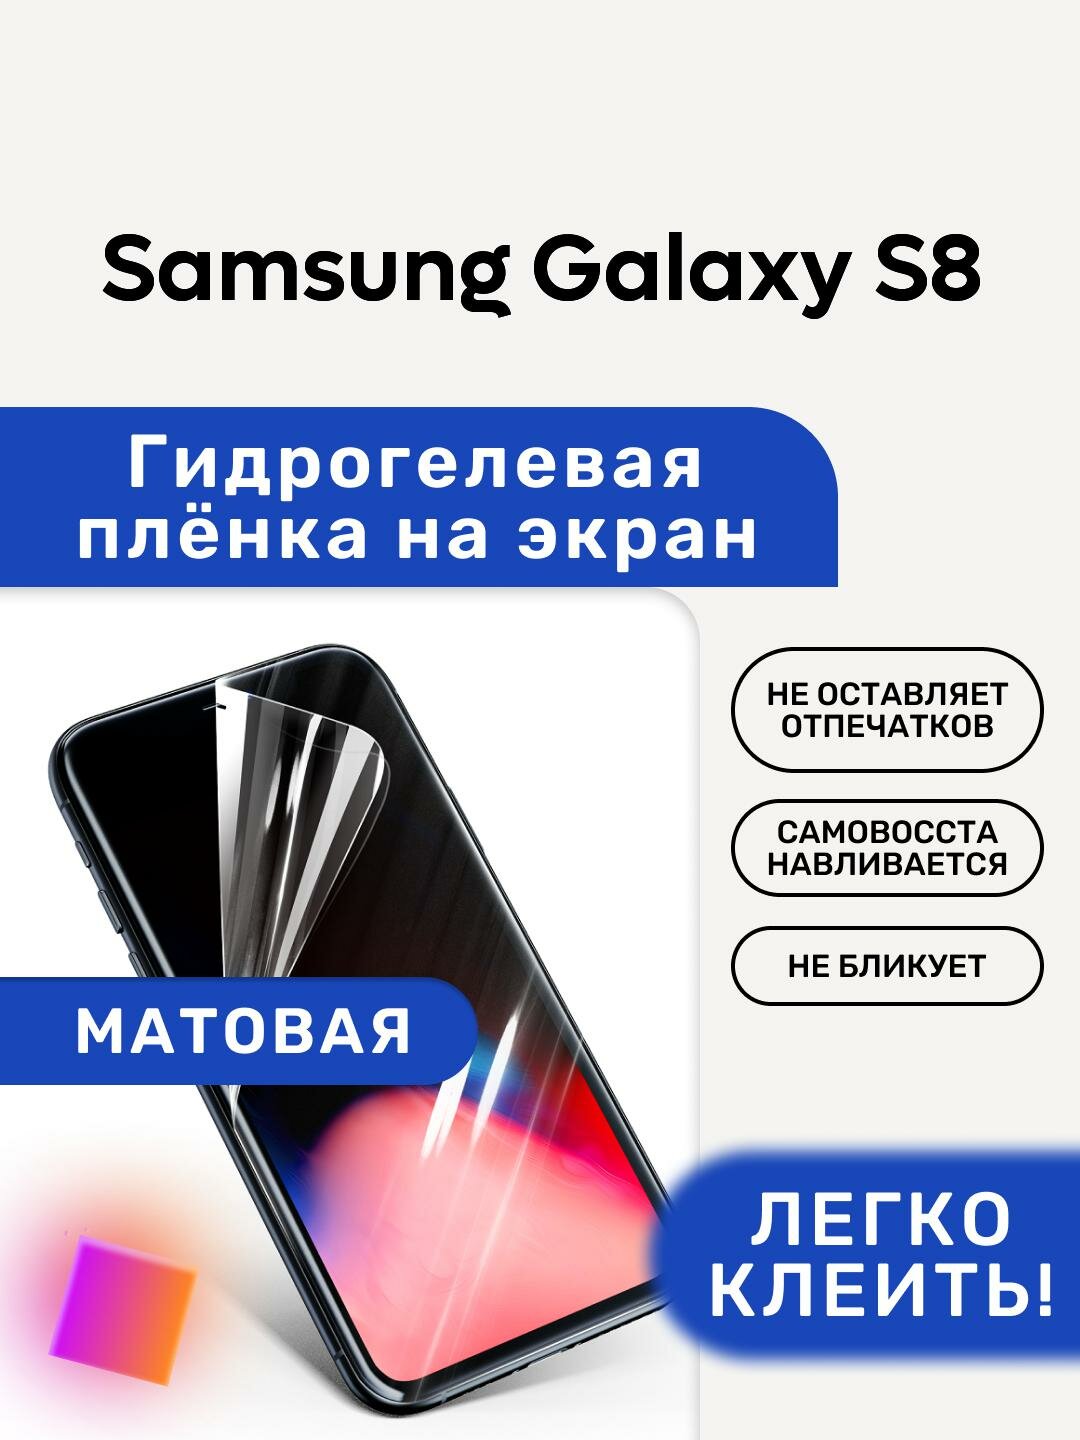 Матовая Гидрогелевая плёнка, полиуретановая, защита экрана Samsung Galaxy S8